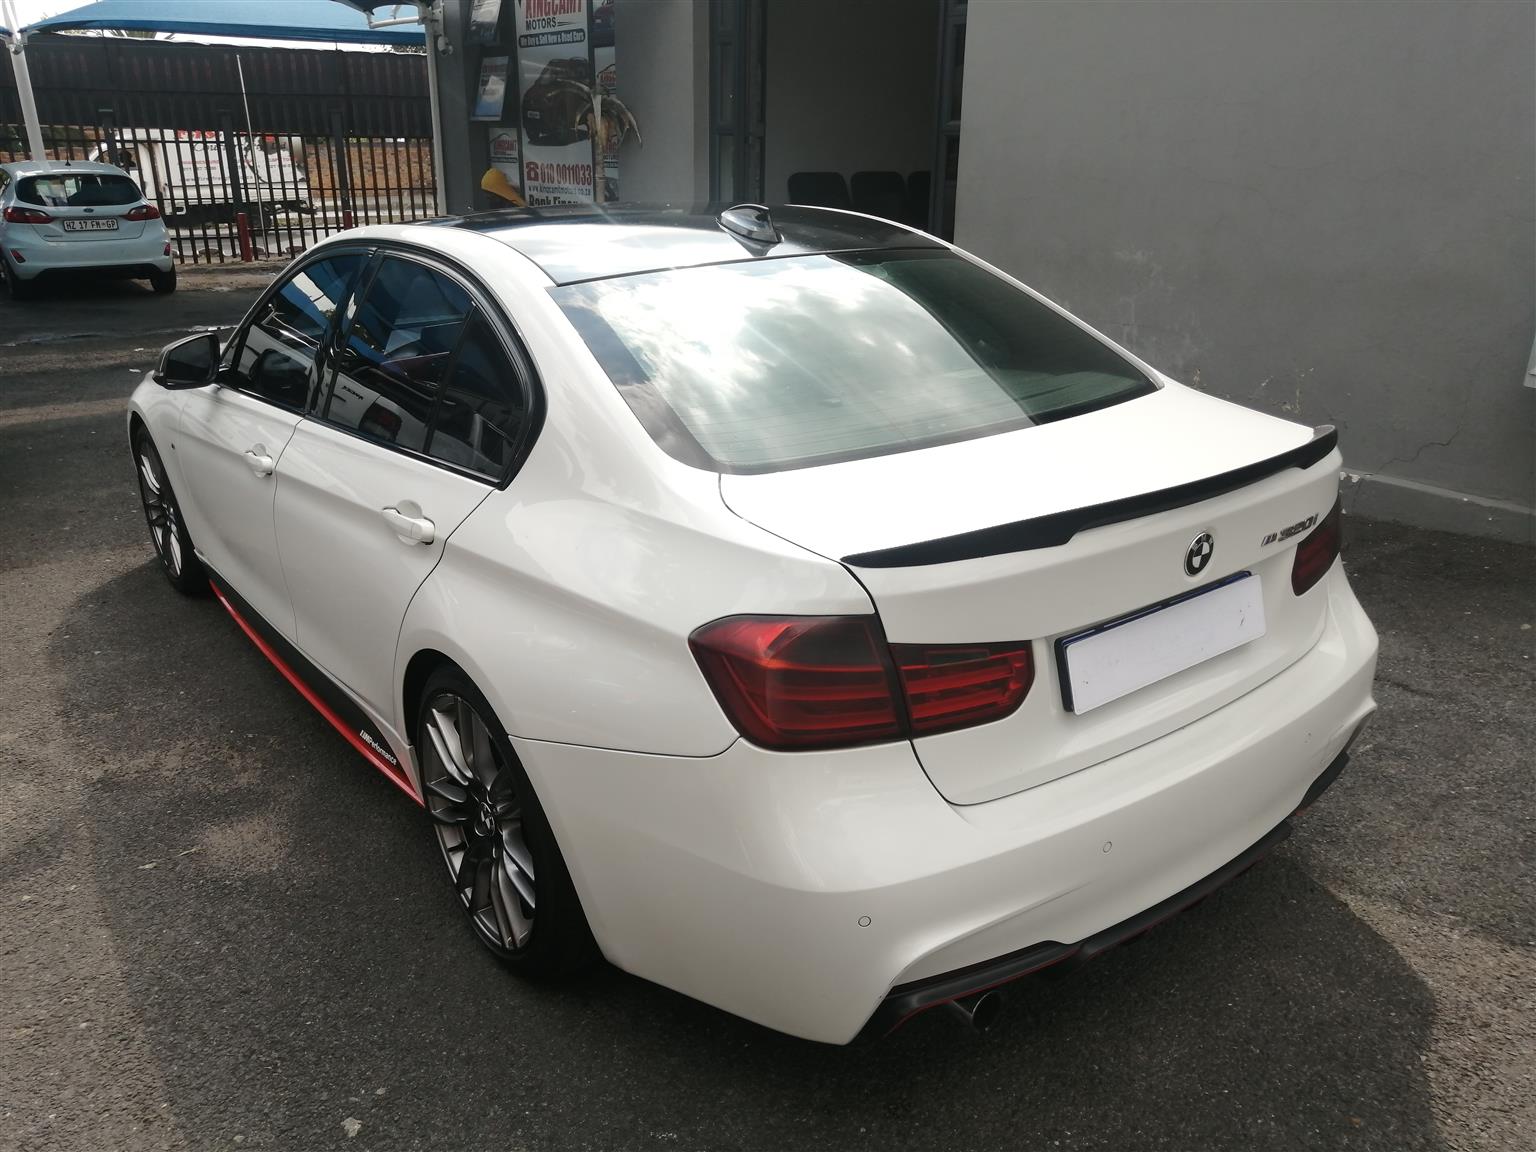 2014 BMW 320i M sport For Sale 